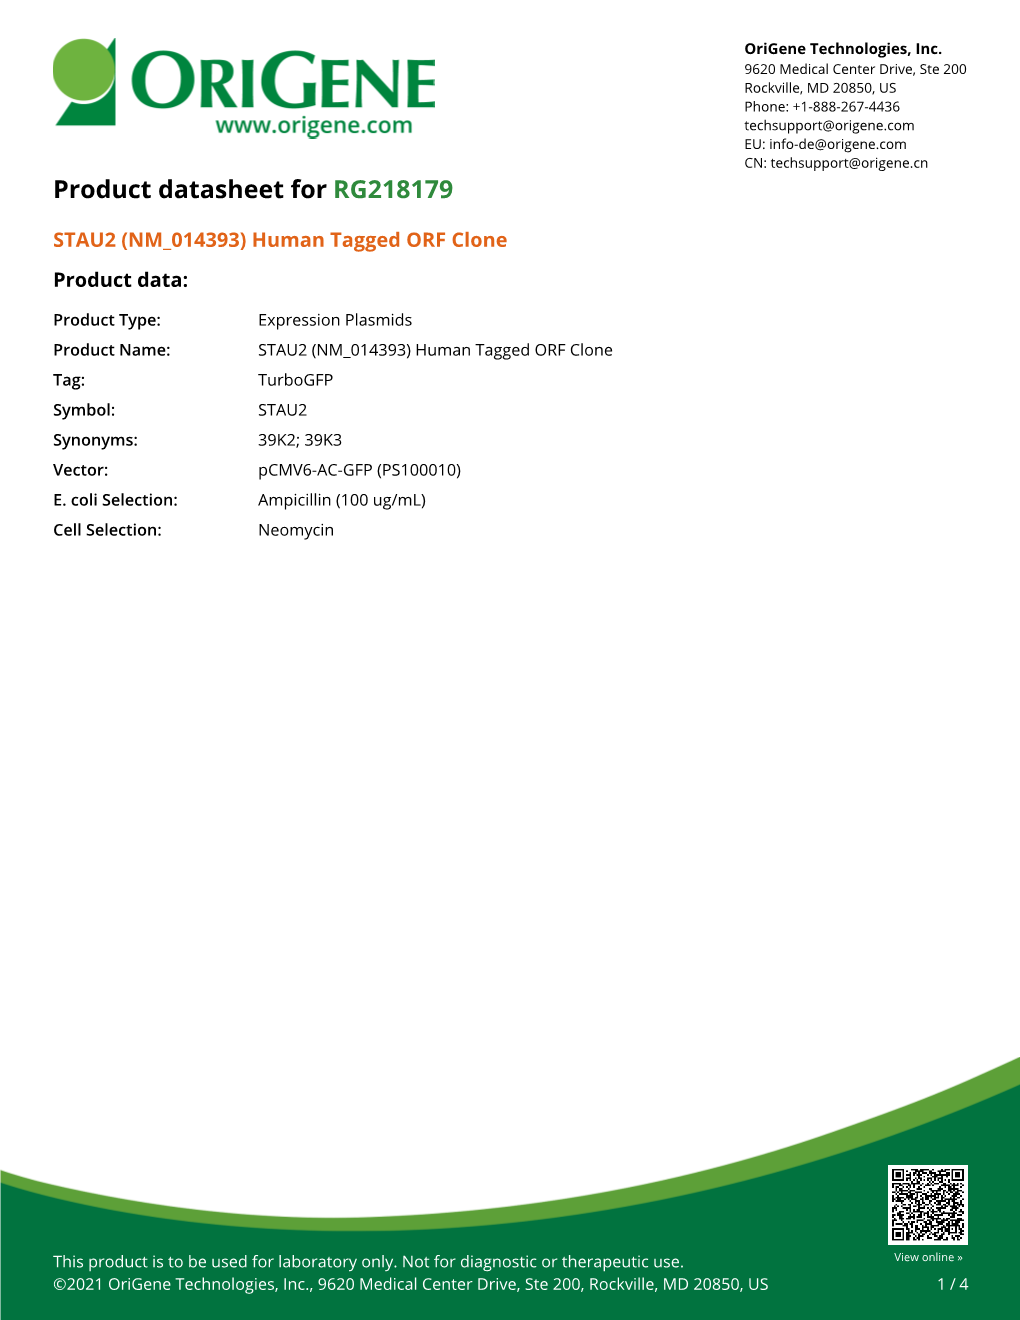 STAU2 (NM 014393) Human Tagged ORF Clone Product Data